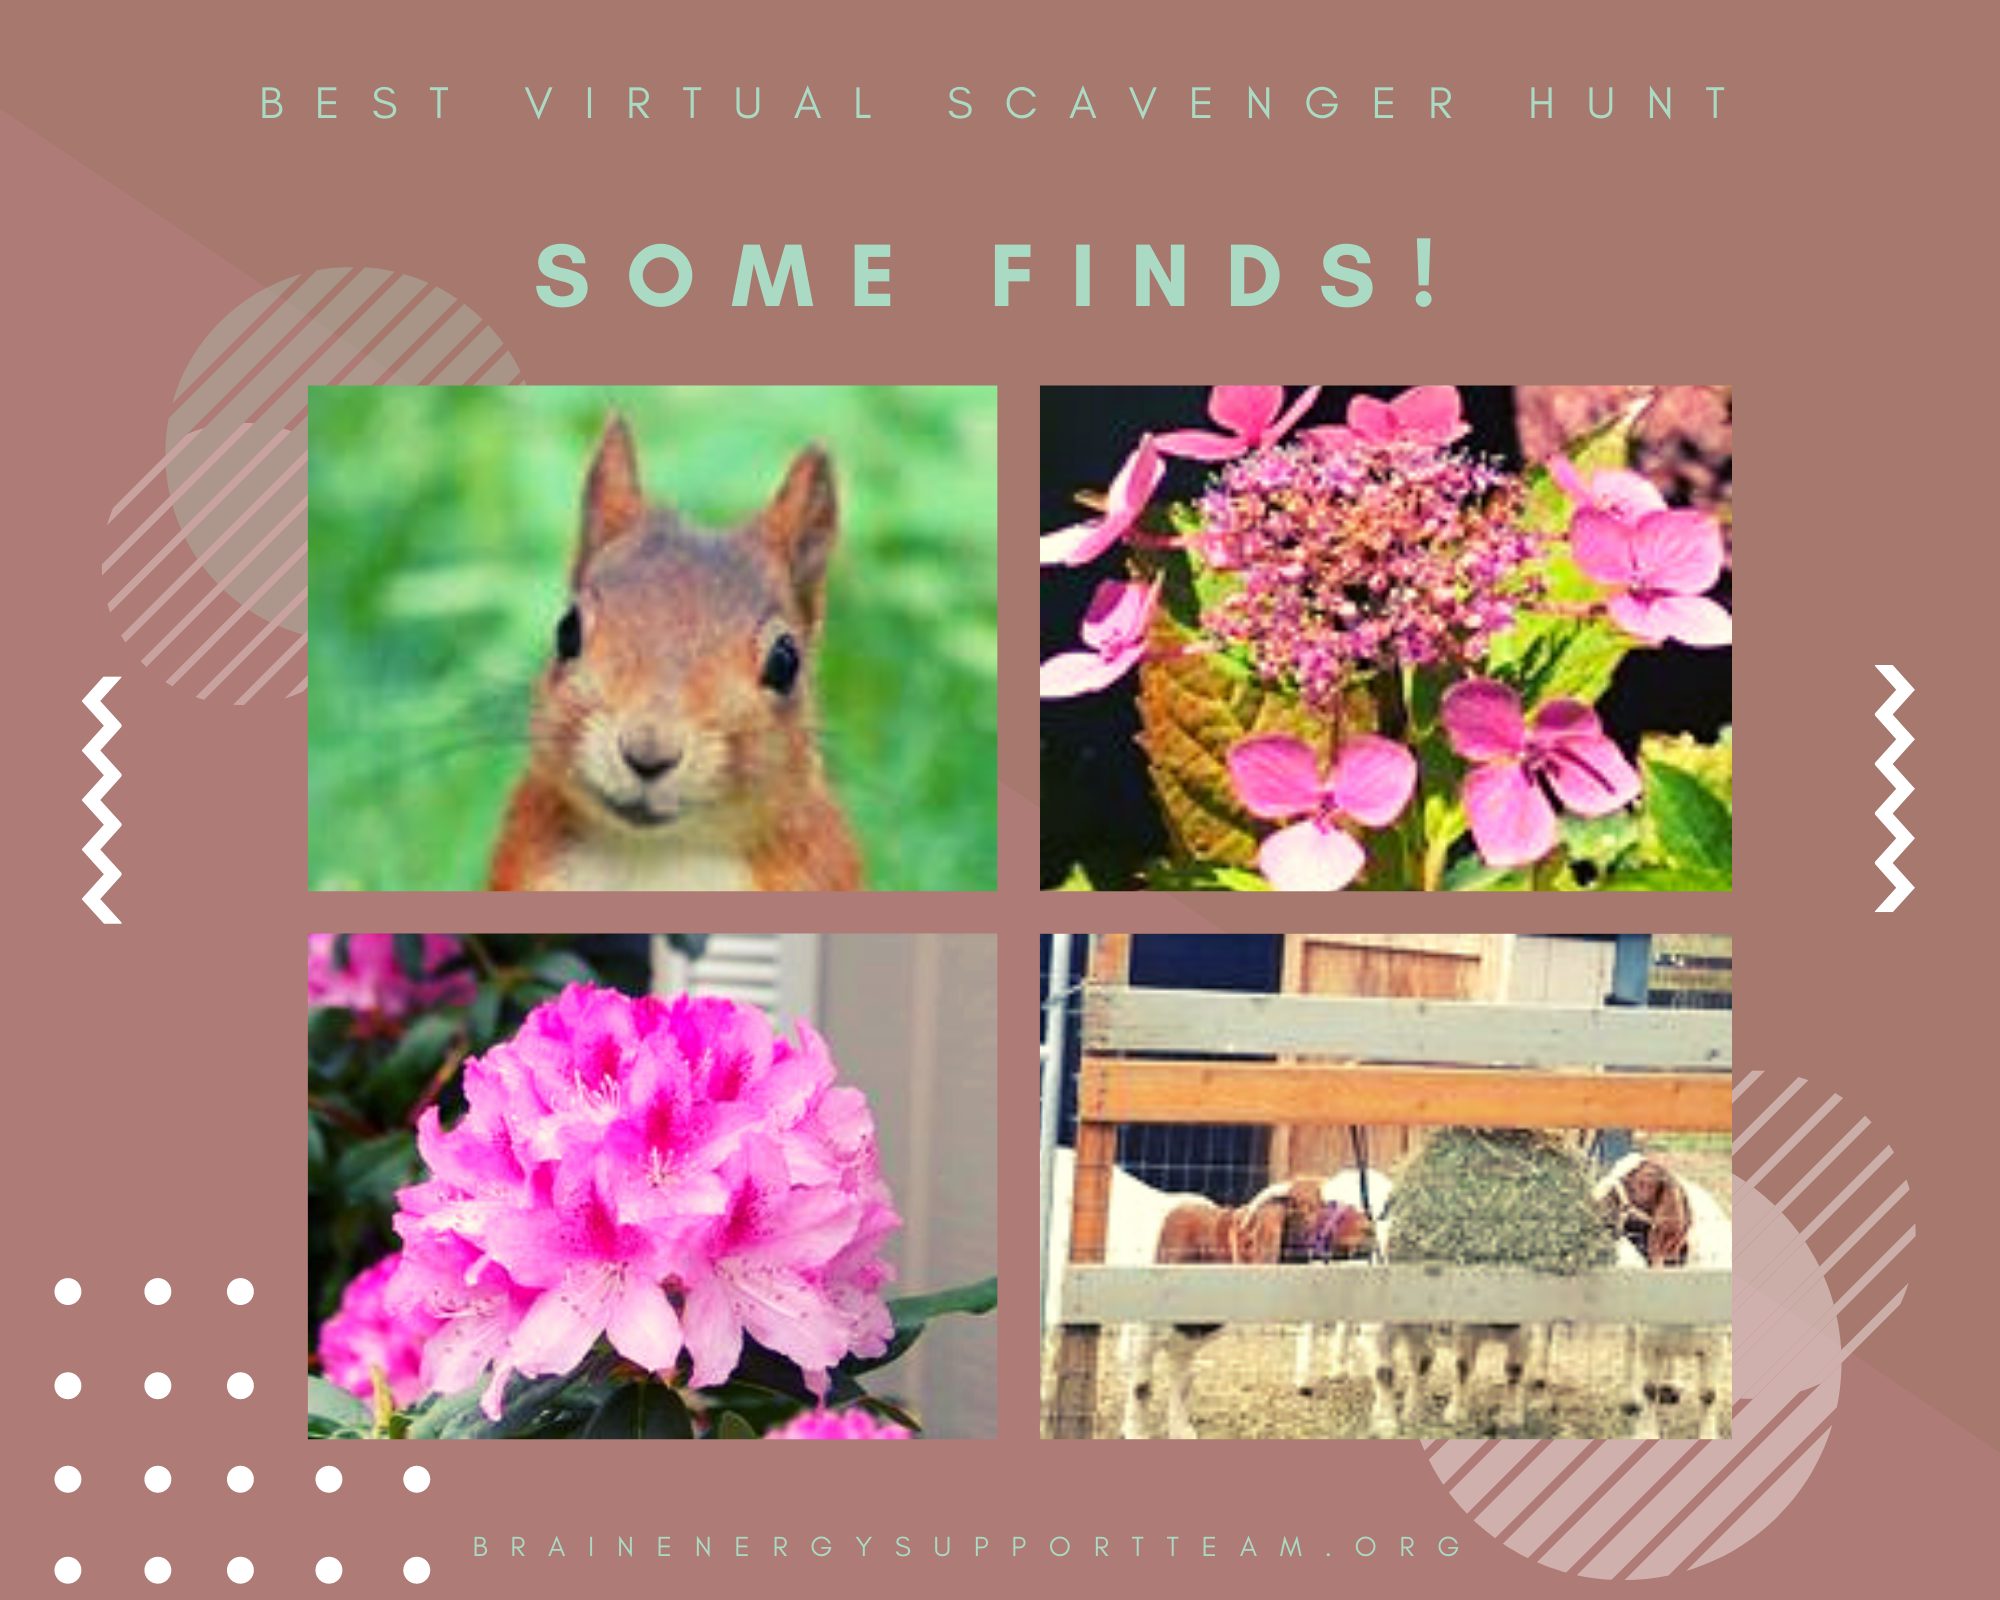 Final week of BEST Virtual Scavenger Hunt Coming Up!